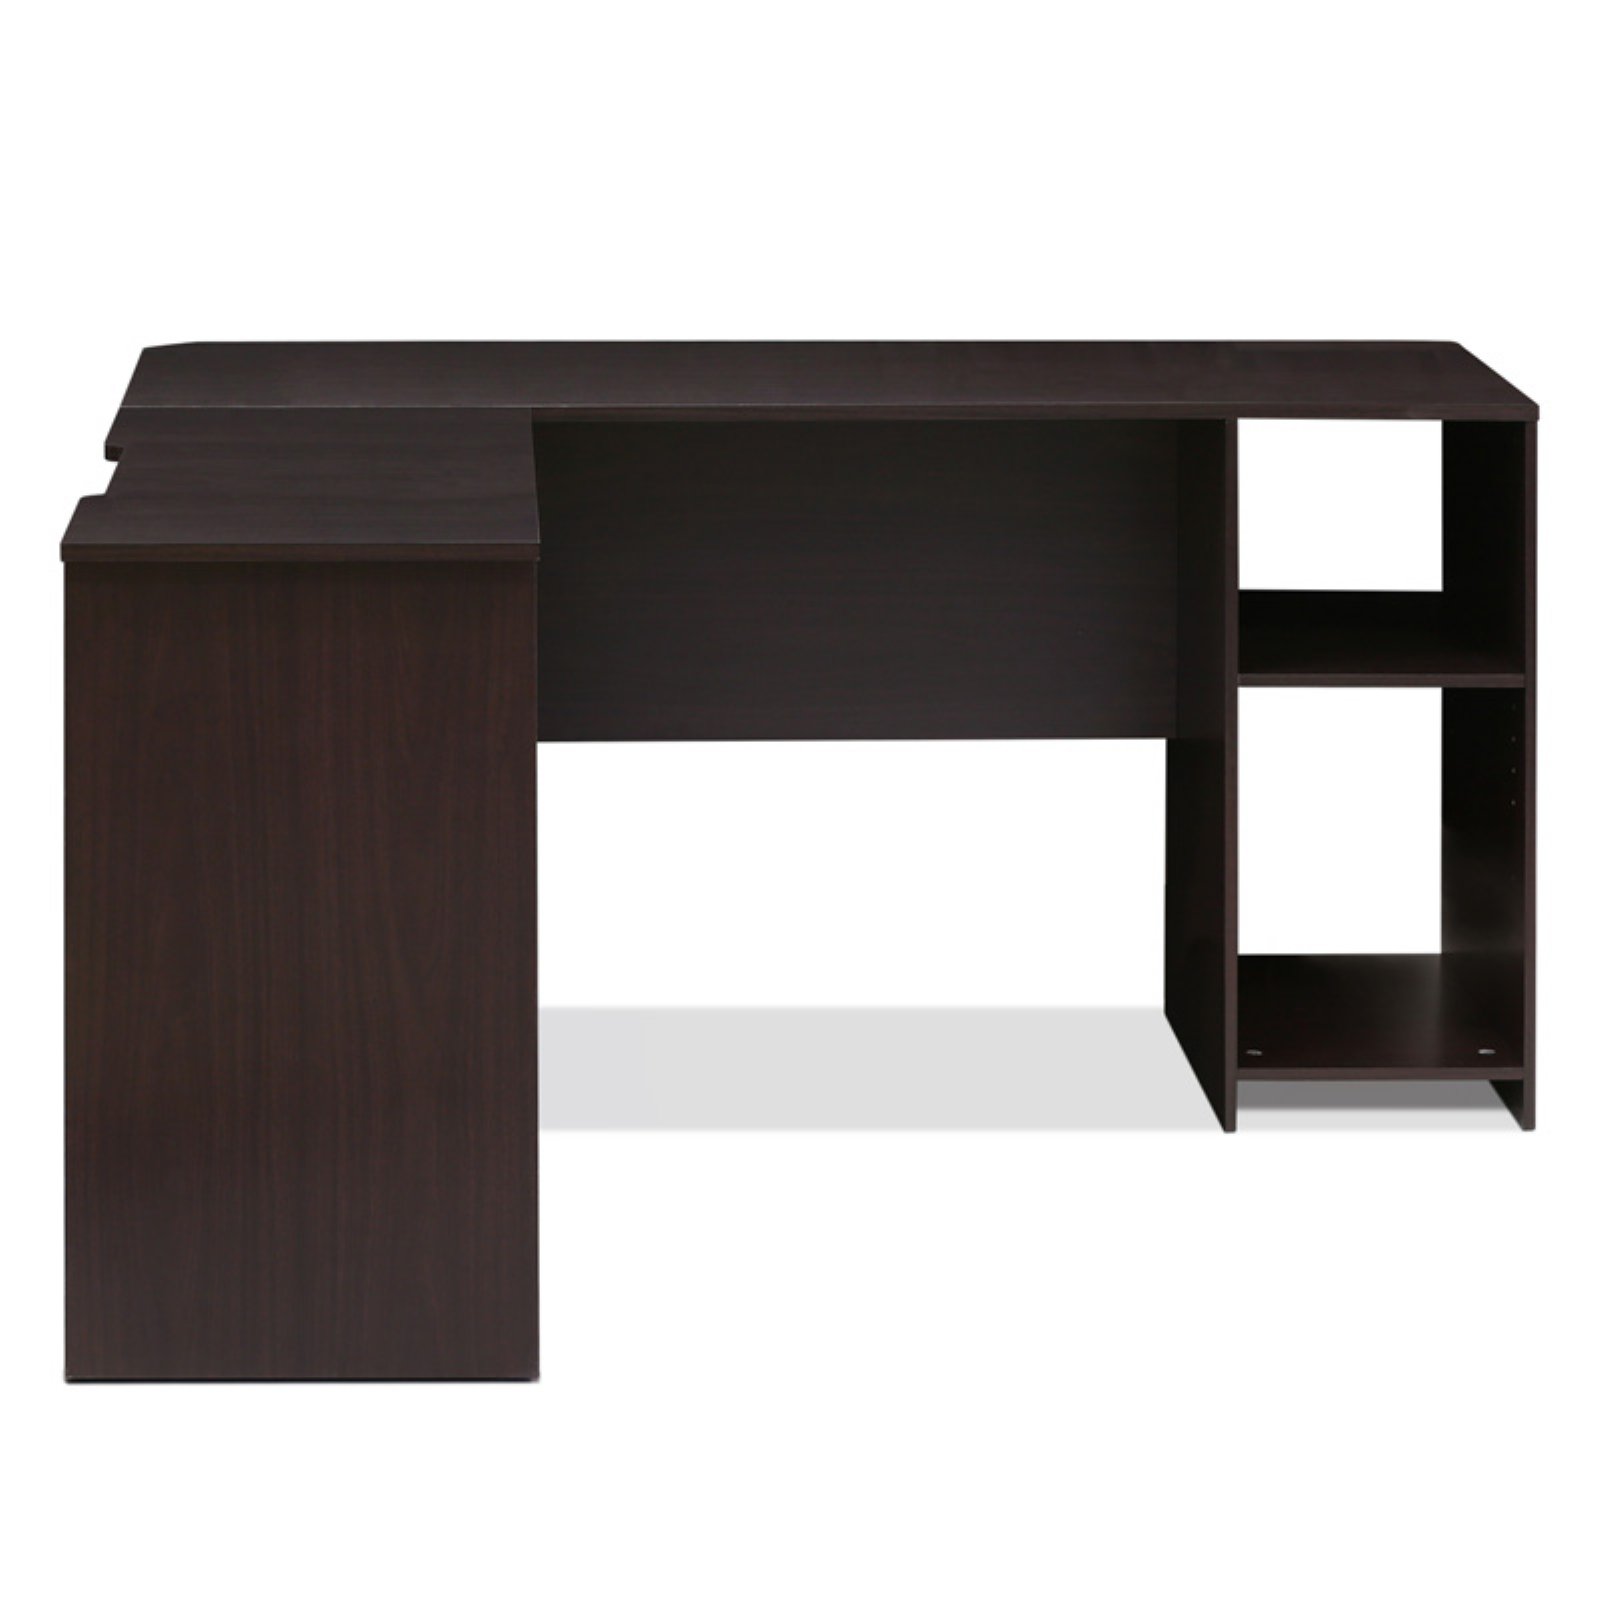 Furinno Indo L-Shaped Desk with Bookshelves, Espresso - image 2 of 8